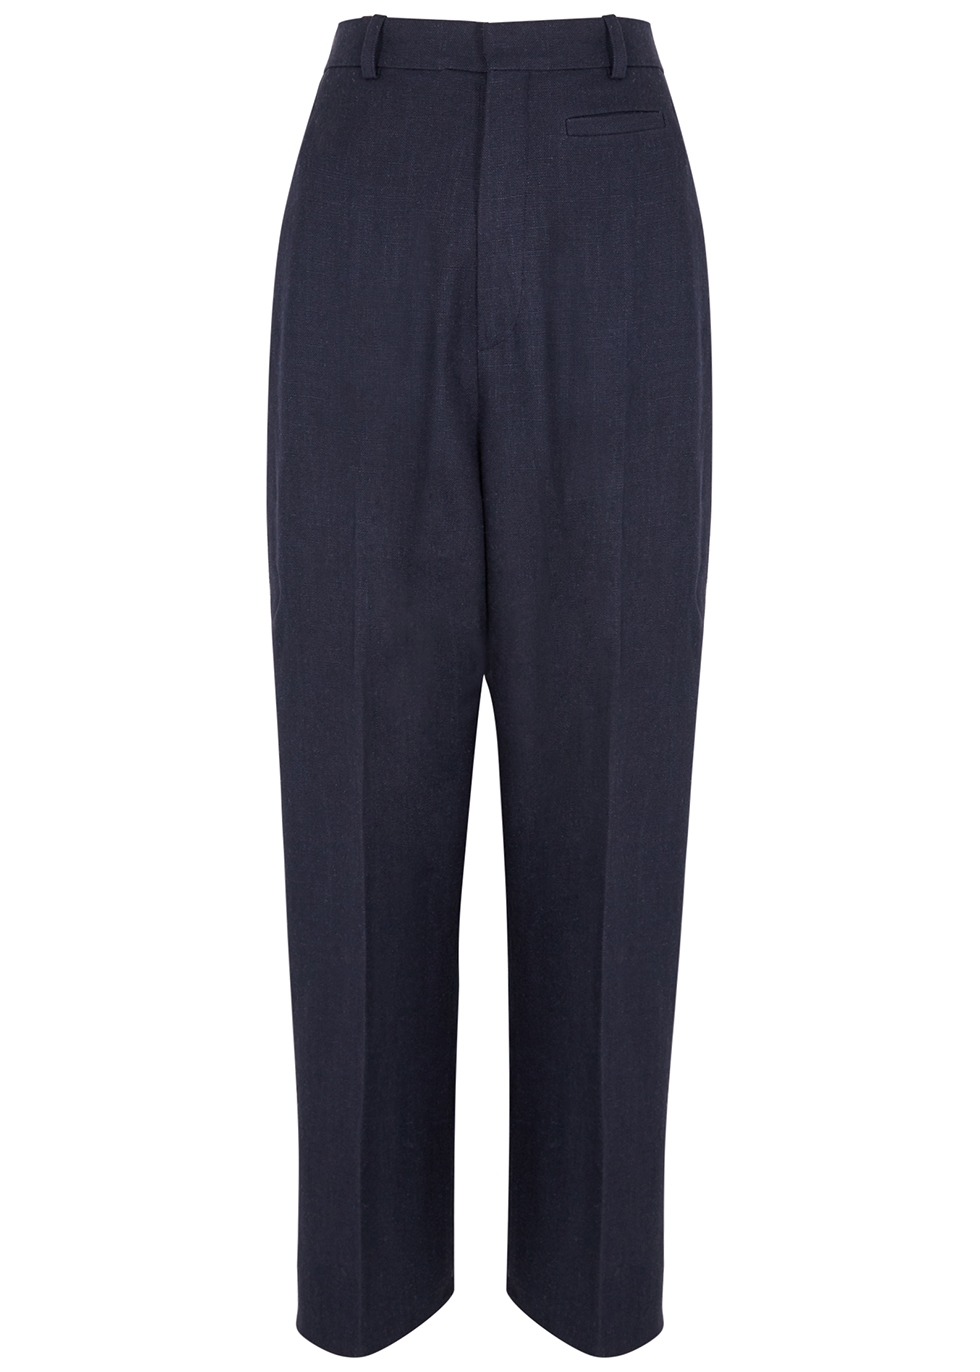 Le Pantalon Santon navy linen-blend trousers